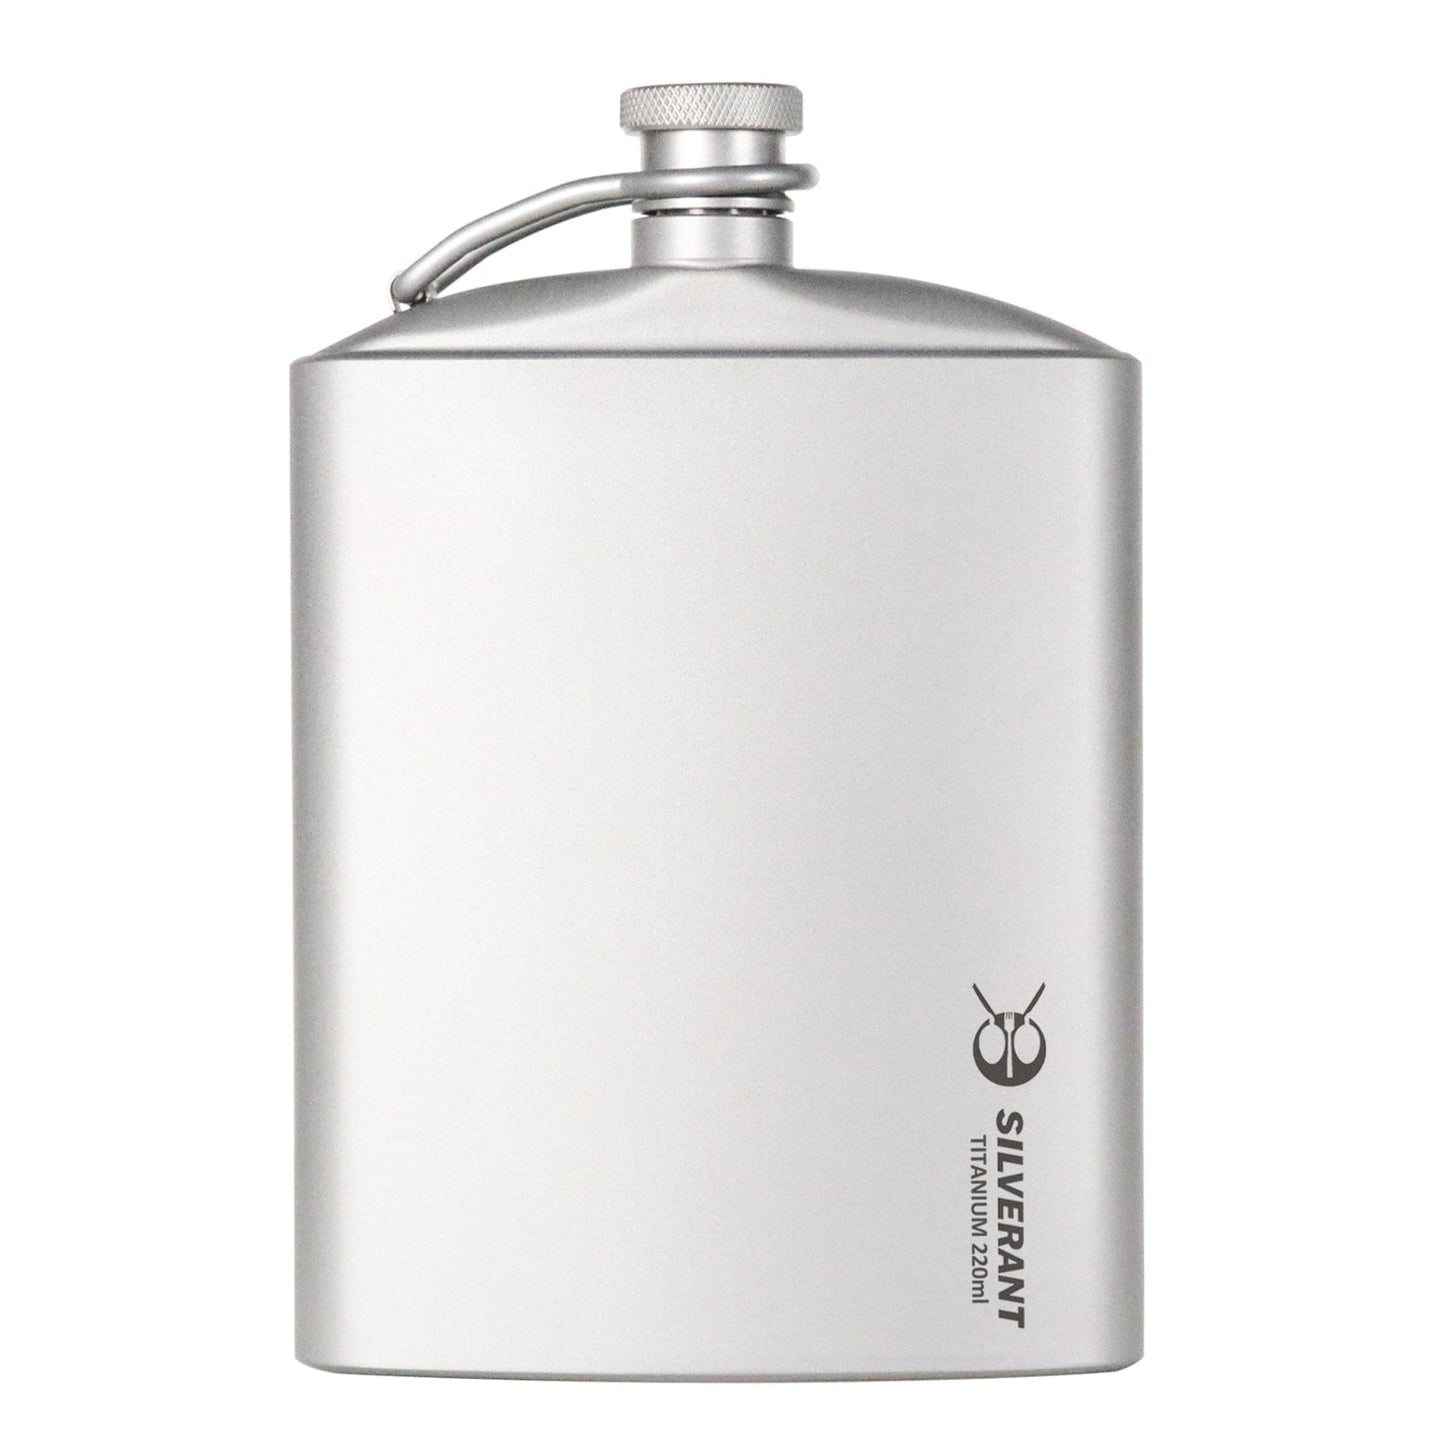 Titanium Hip Flask & Funnel - 220ml/7.74 fl oz - SilverAnt Outdoors